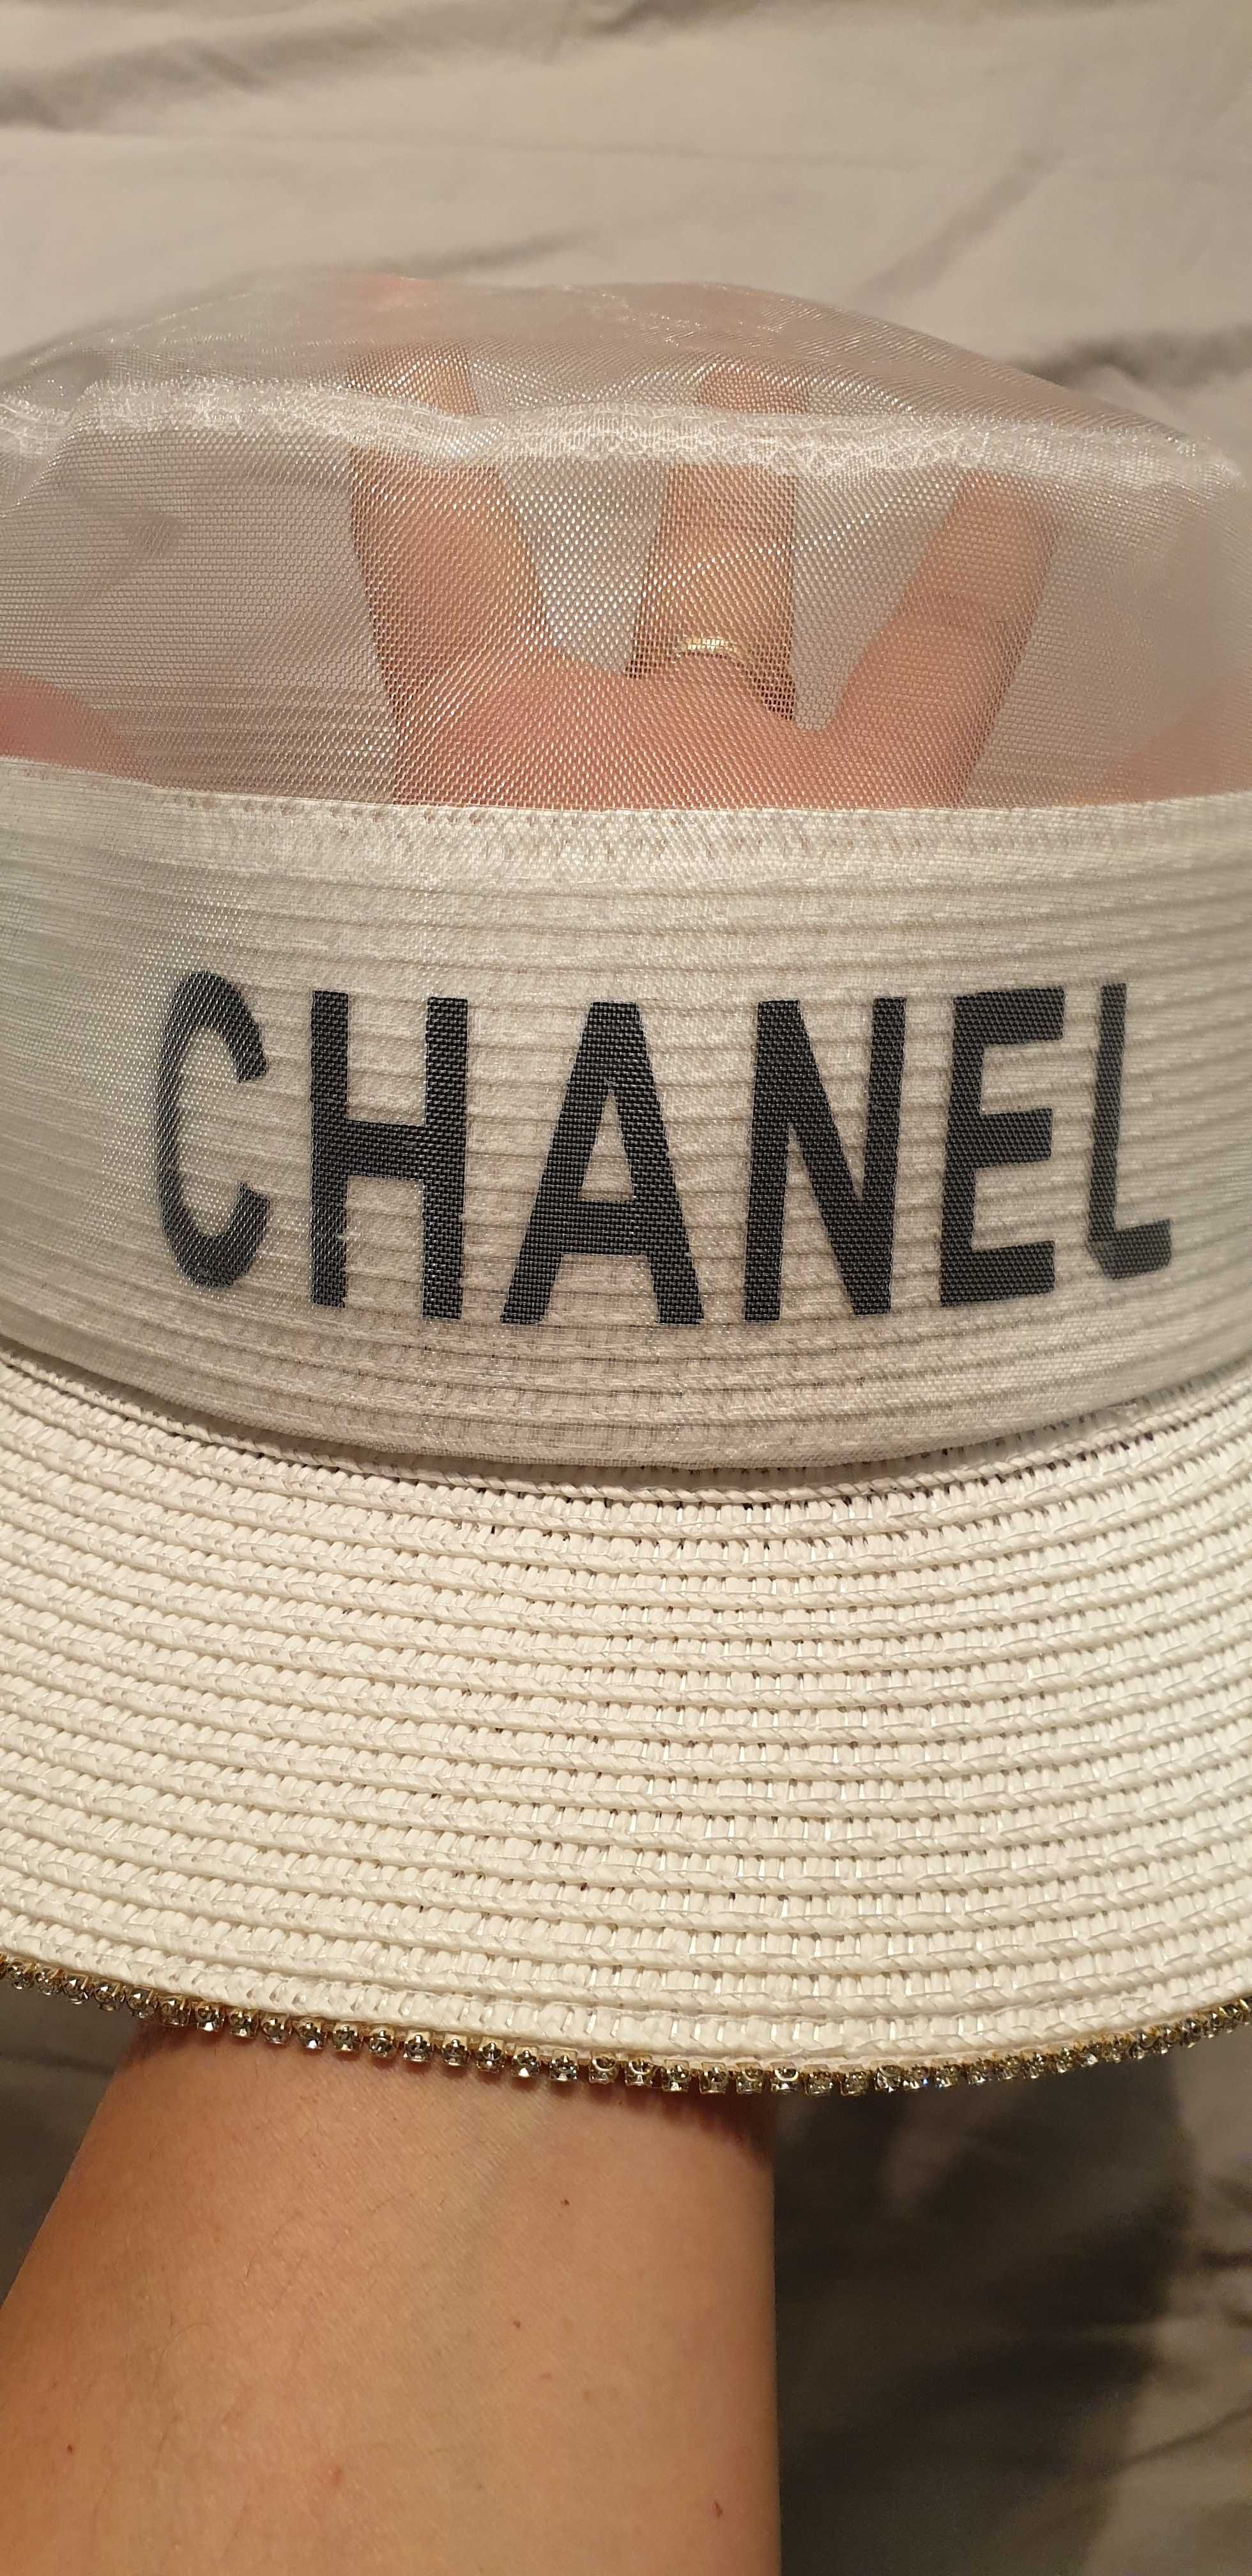 Palarie soare vara Chanel originala, noua cu eticheta pret fix